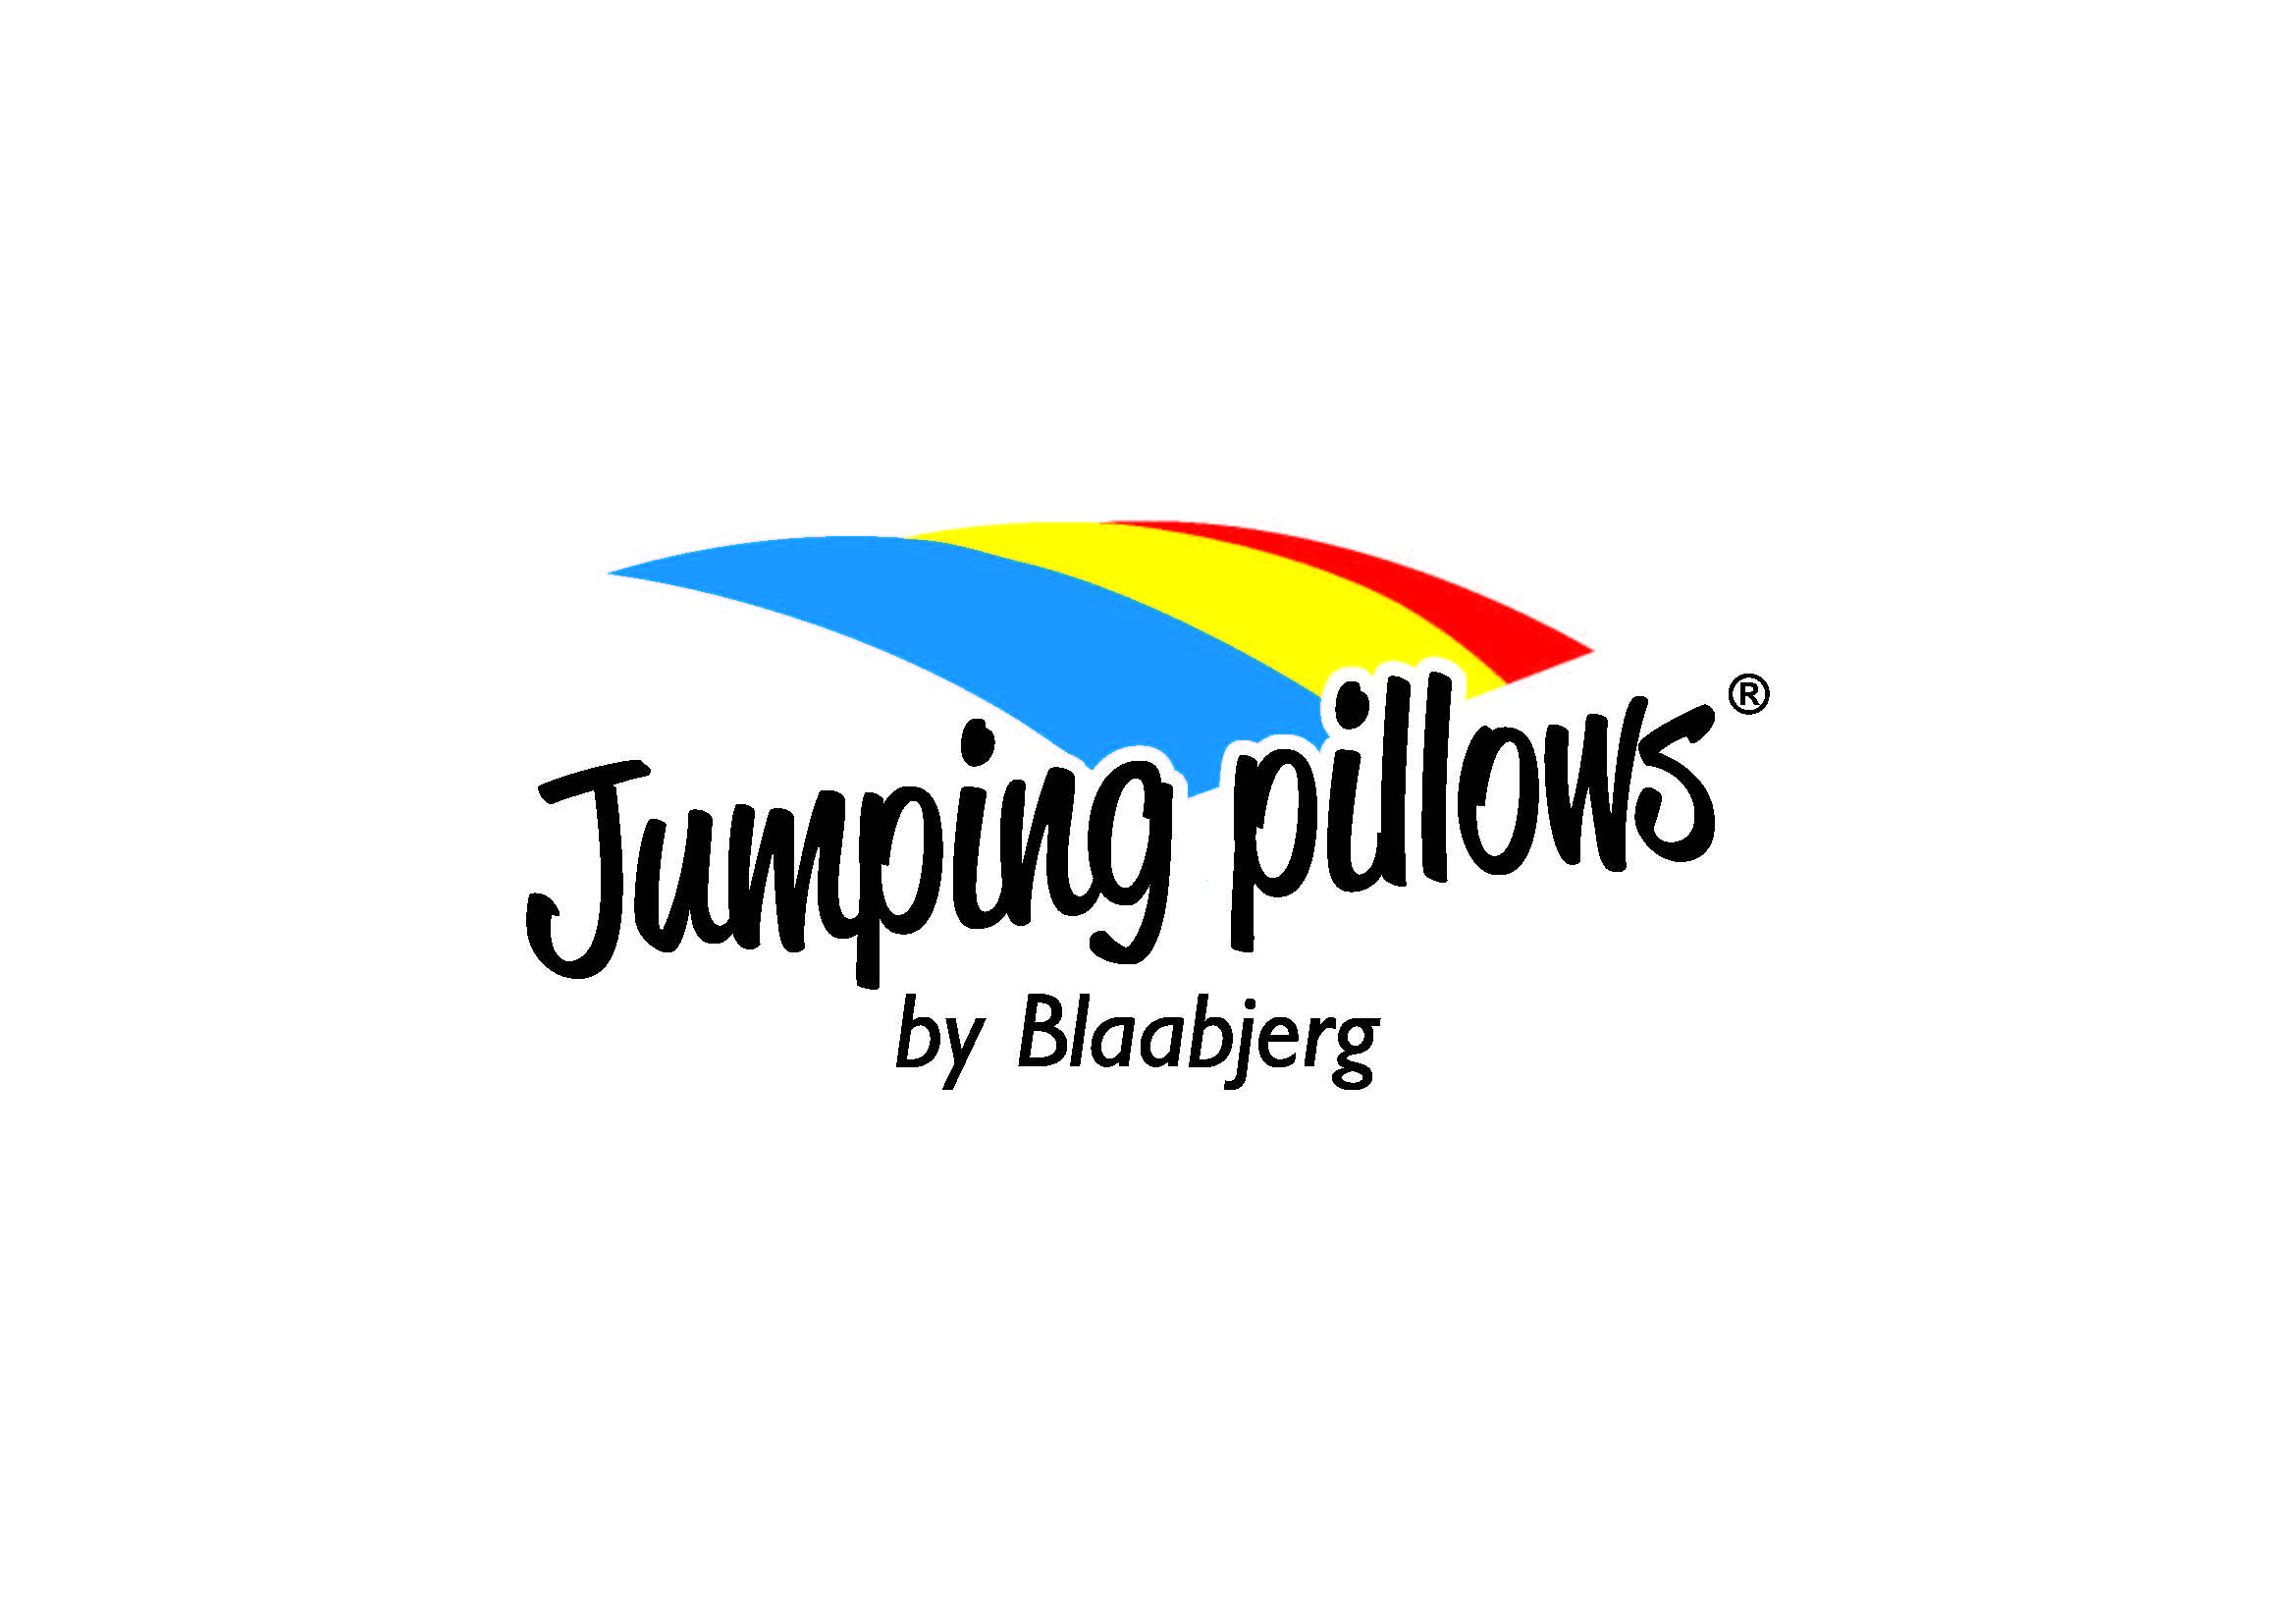 Jumping pillows